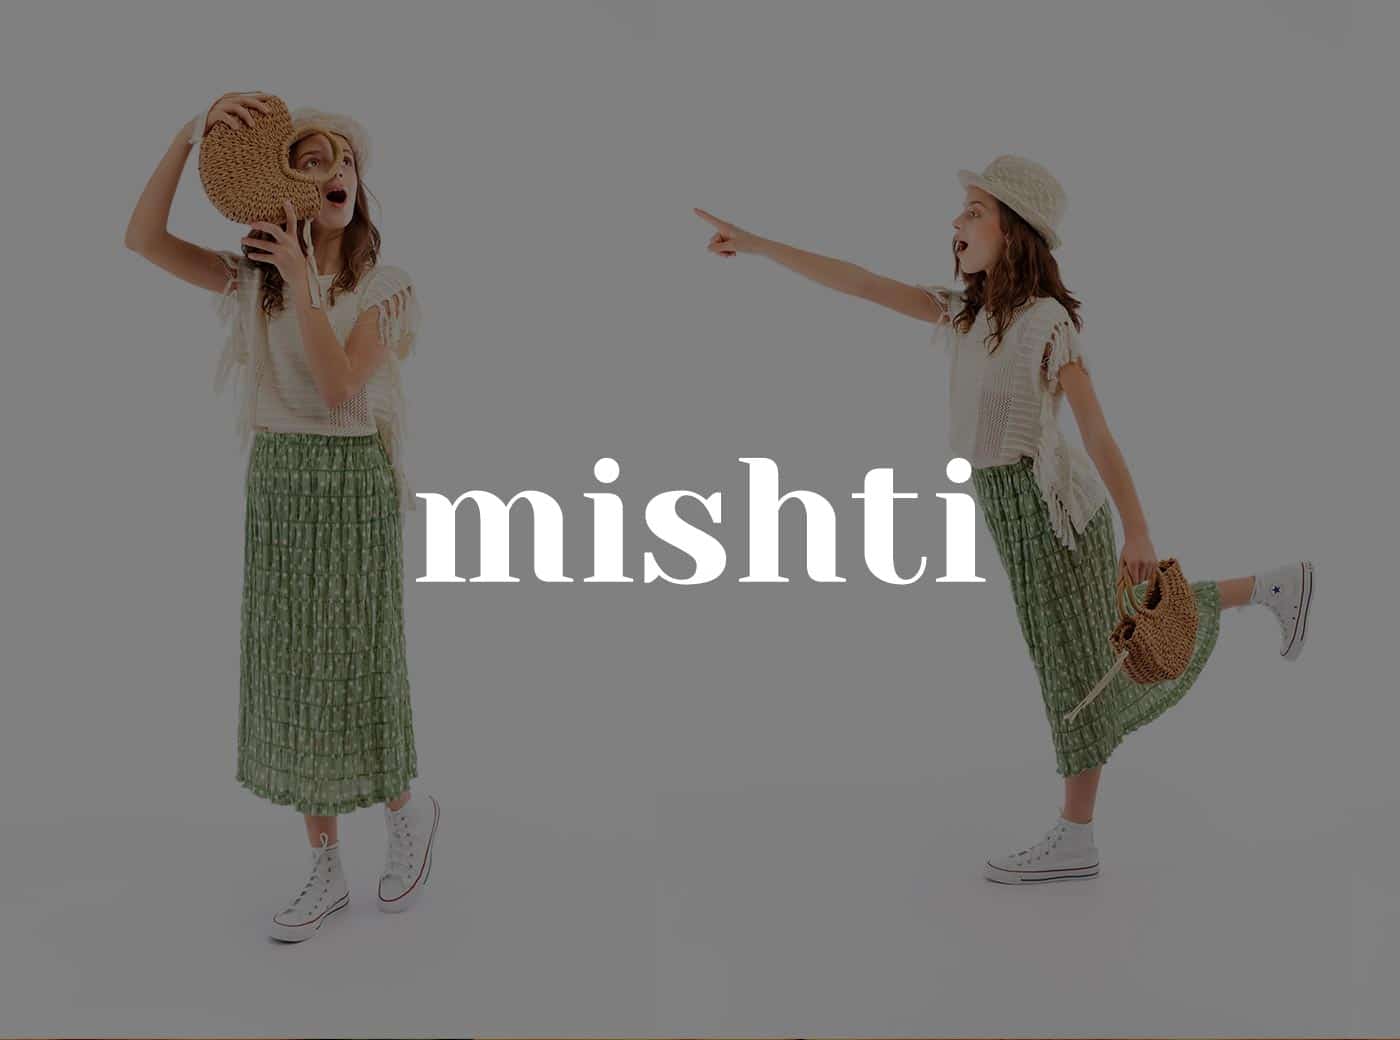 img destacada ecommerce mishti - inova3 - Marketing digital desde ourense